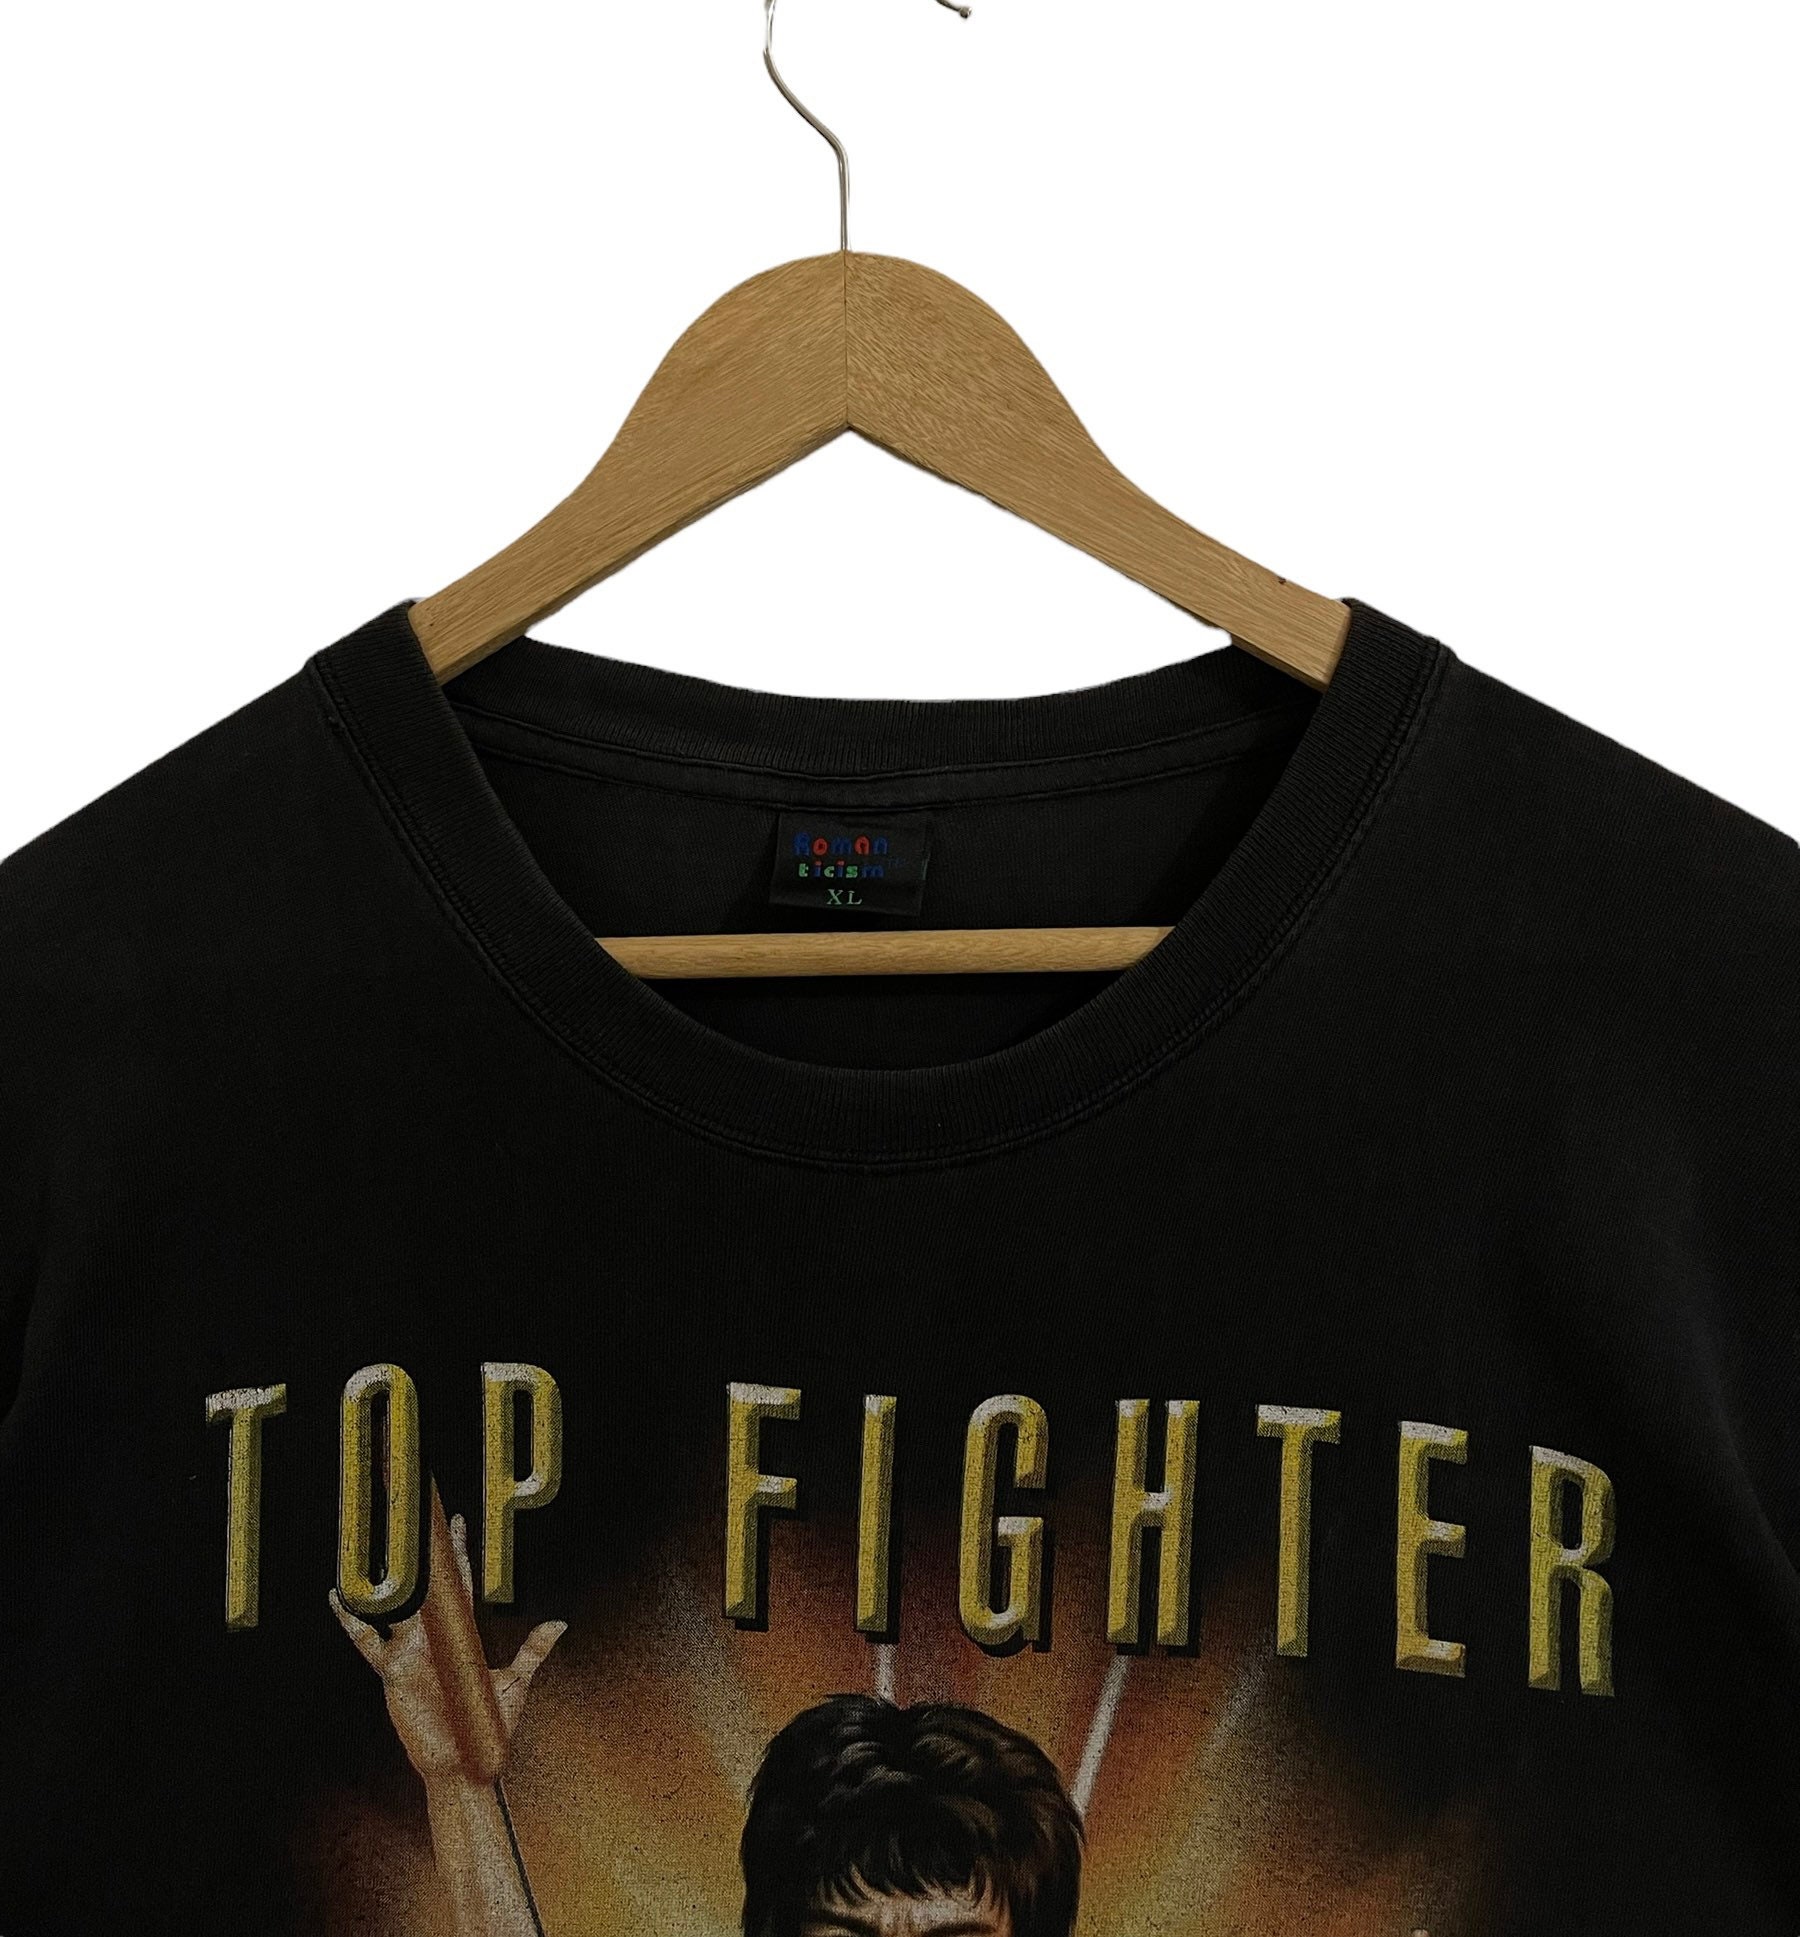 Hot Sale Vintage Top Fighter Tshirt Bruce Lee Jackie Chan Jet 